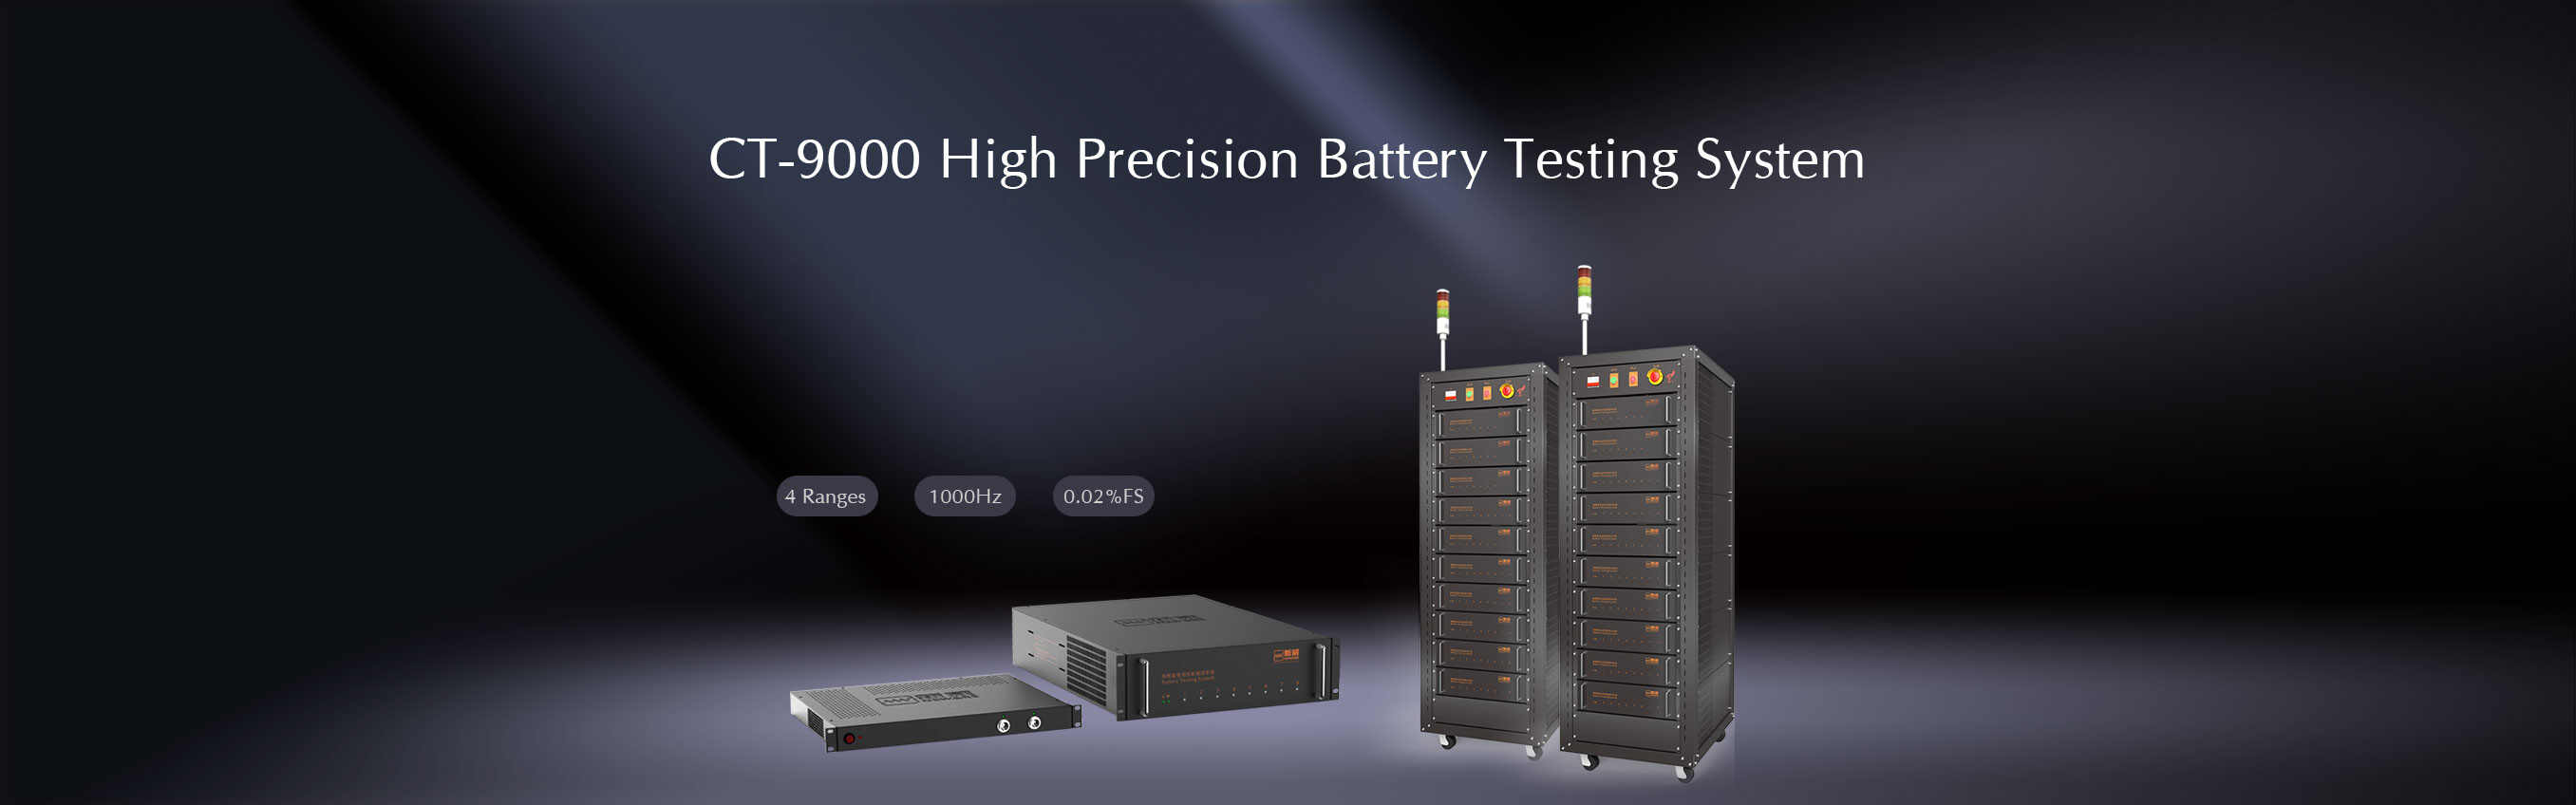 High Precision Battery Testing